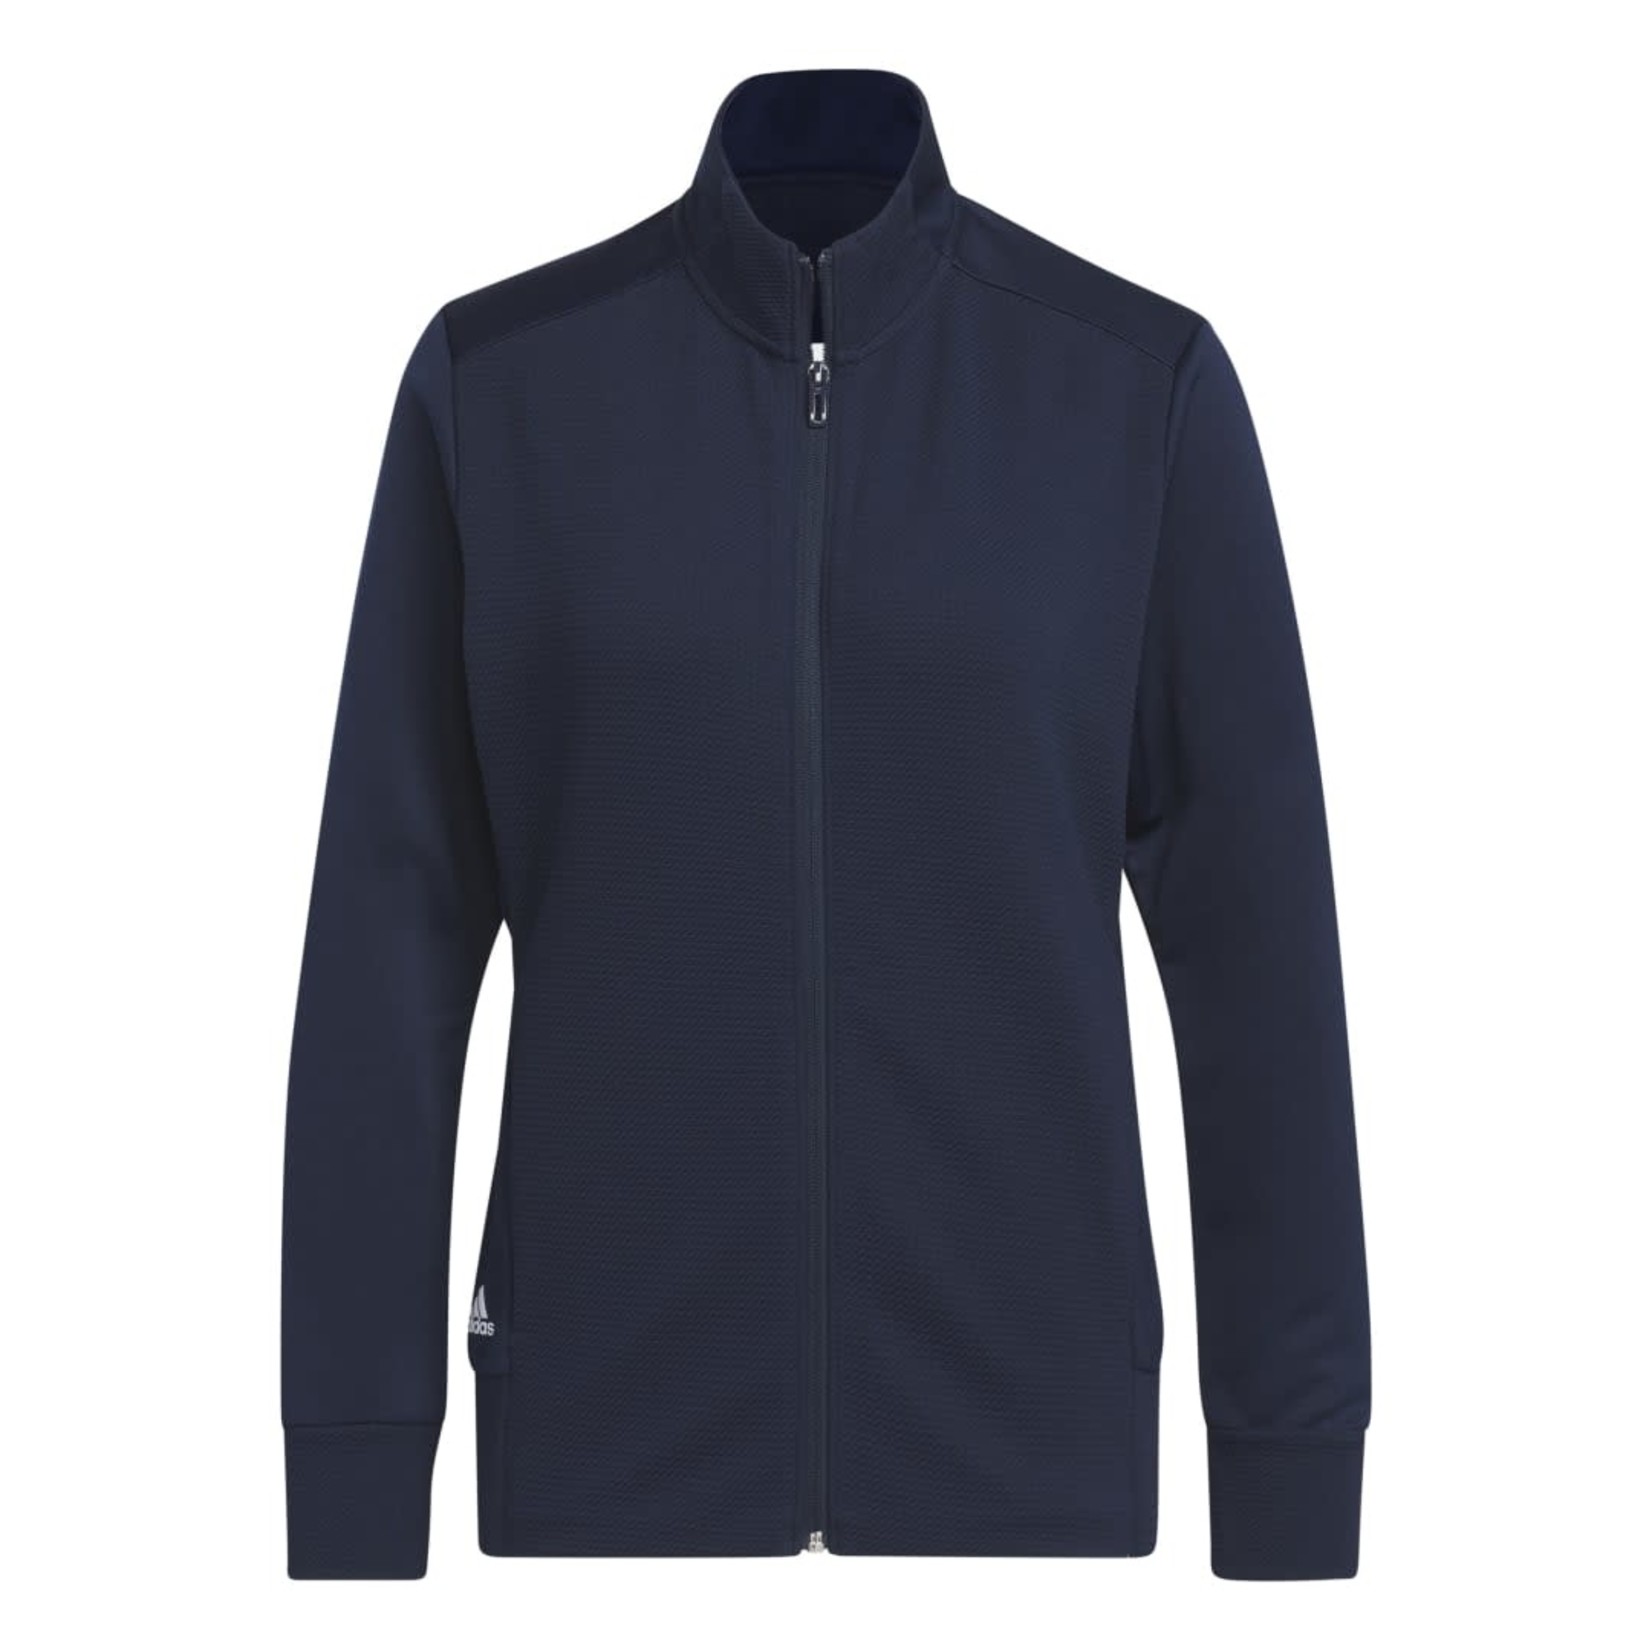 Adidas Adidas W Texture Full Zip Jacket - Collegiate Navy